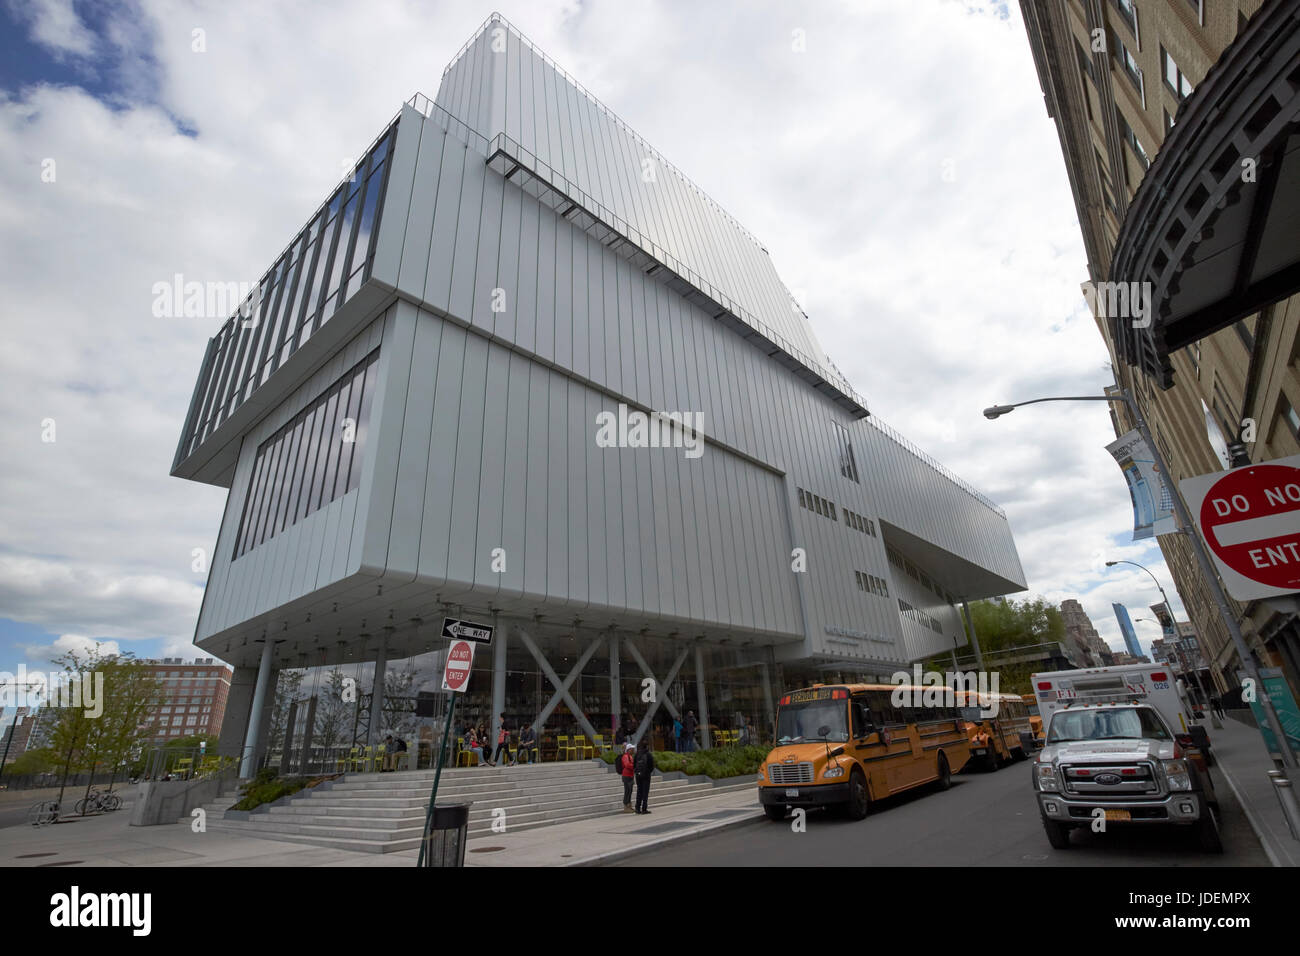 Whitney museum of american art New York City USA Stock Photo